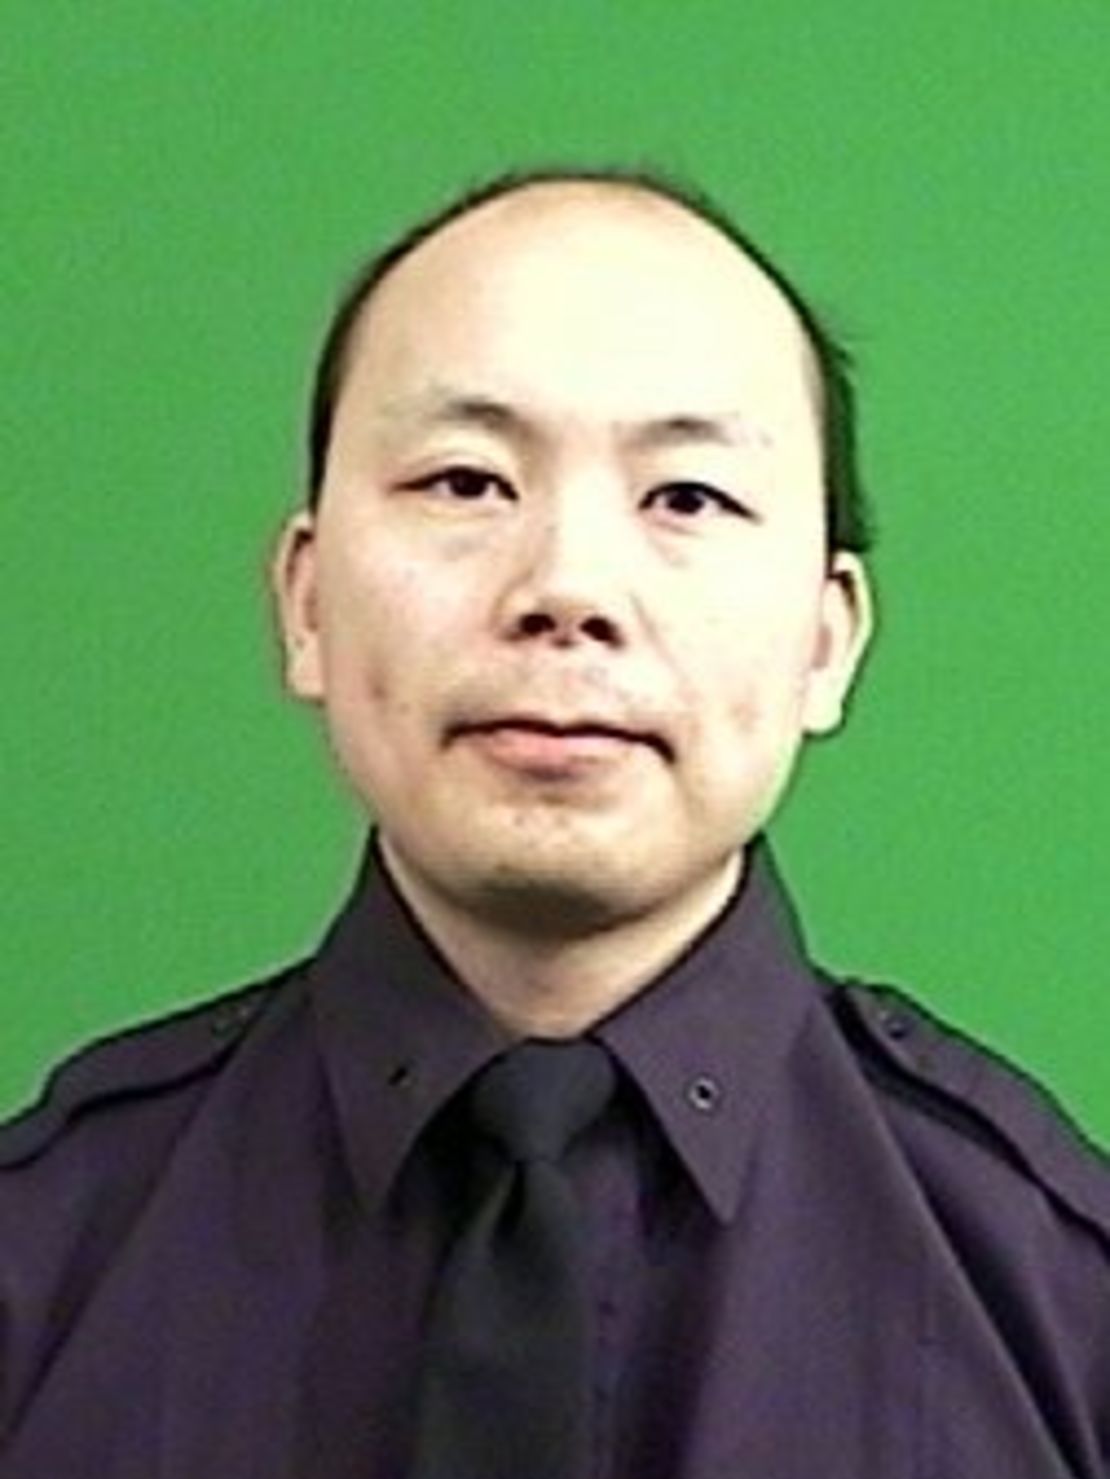 New York Police Officer Wenjian Liu